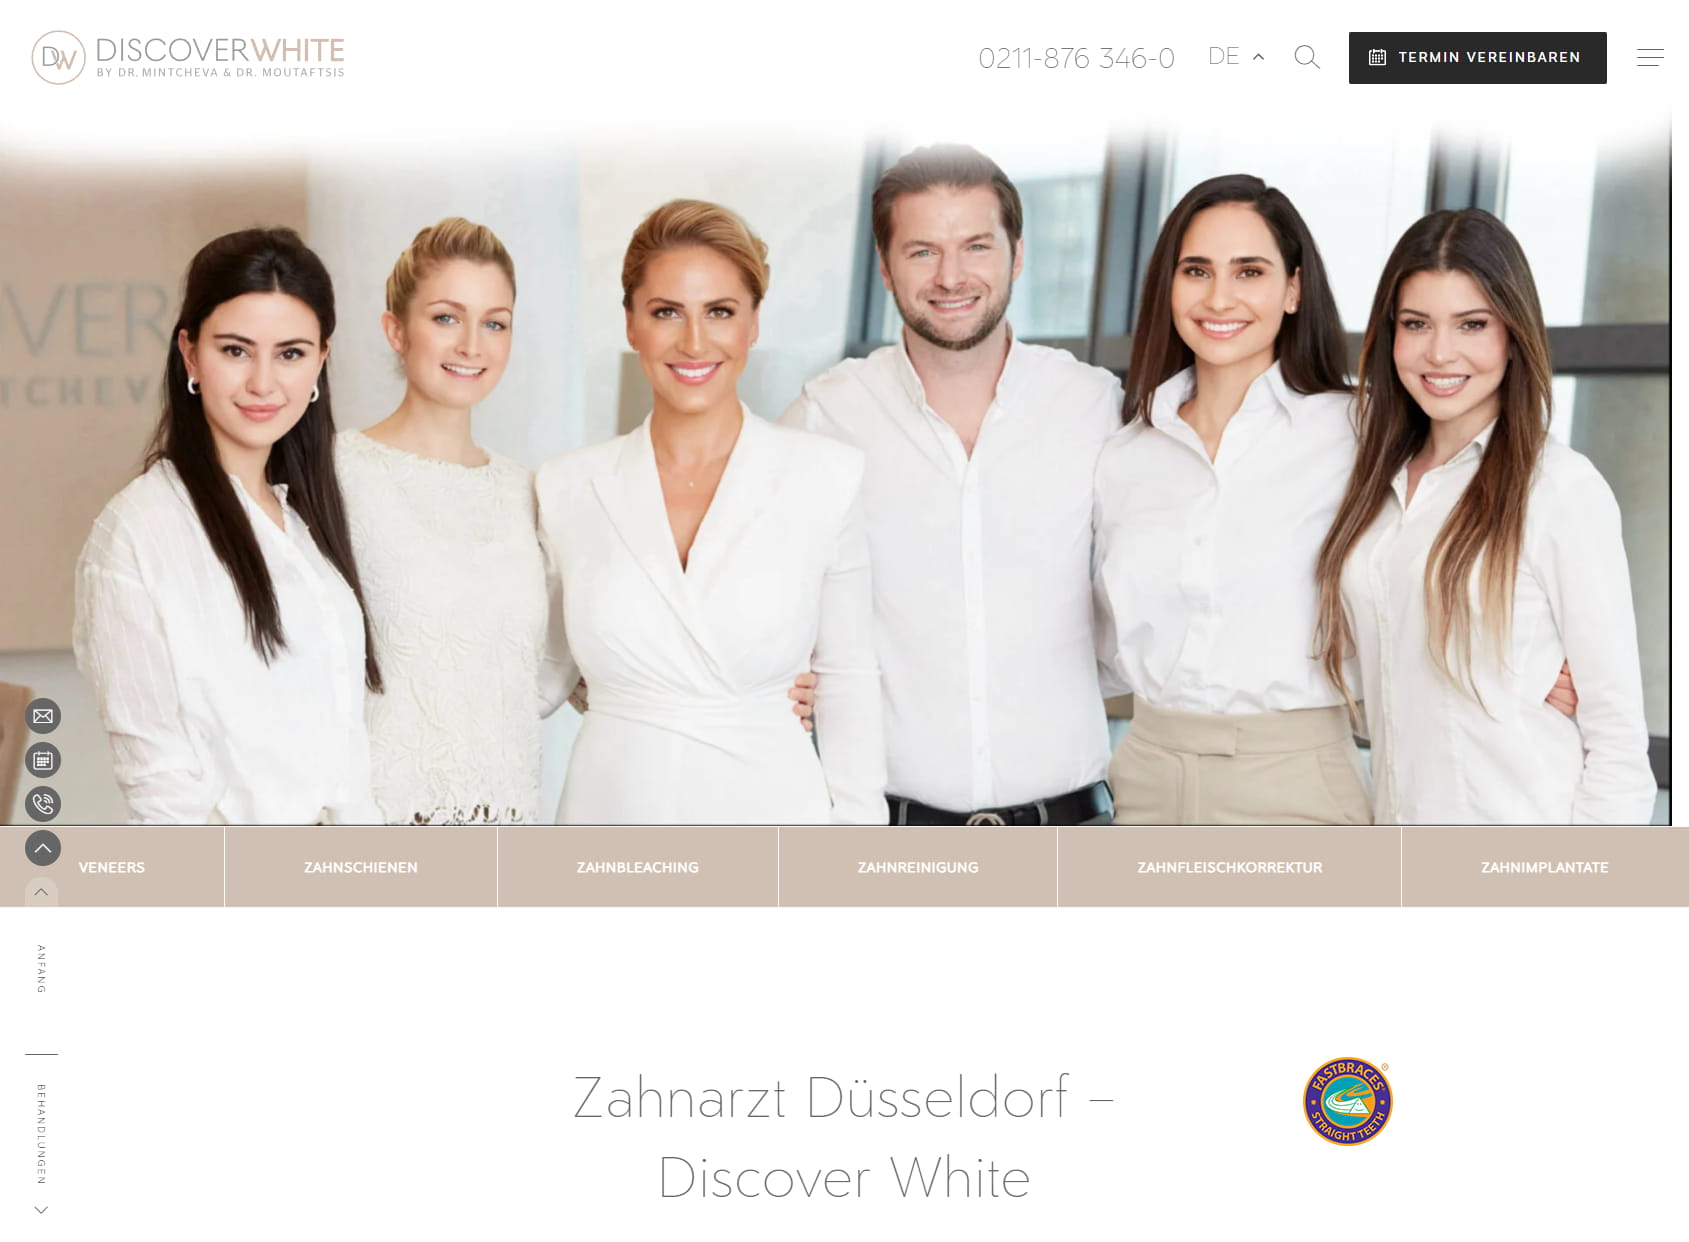 Zahnarzt Düsseldorf - Discover White - by Dr. Mintcheva